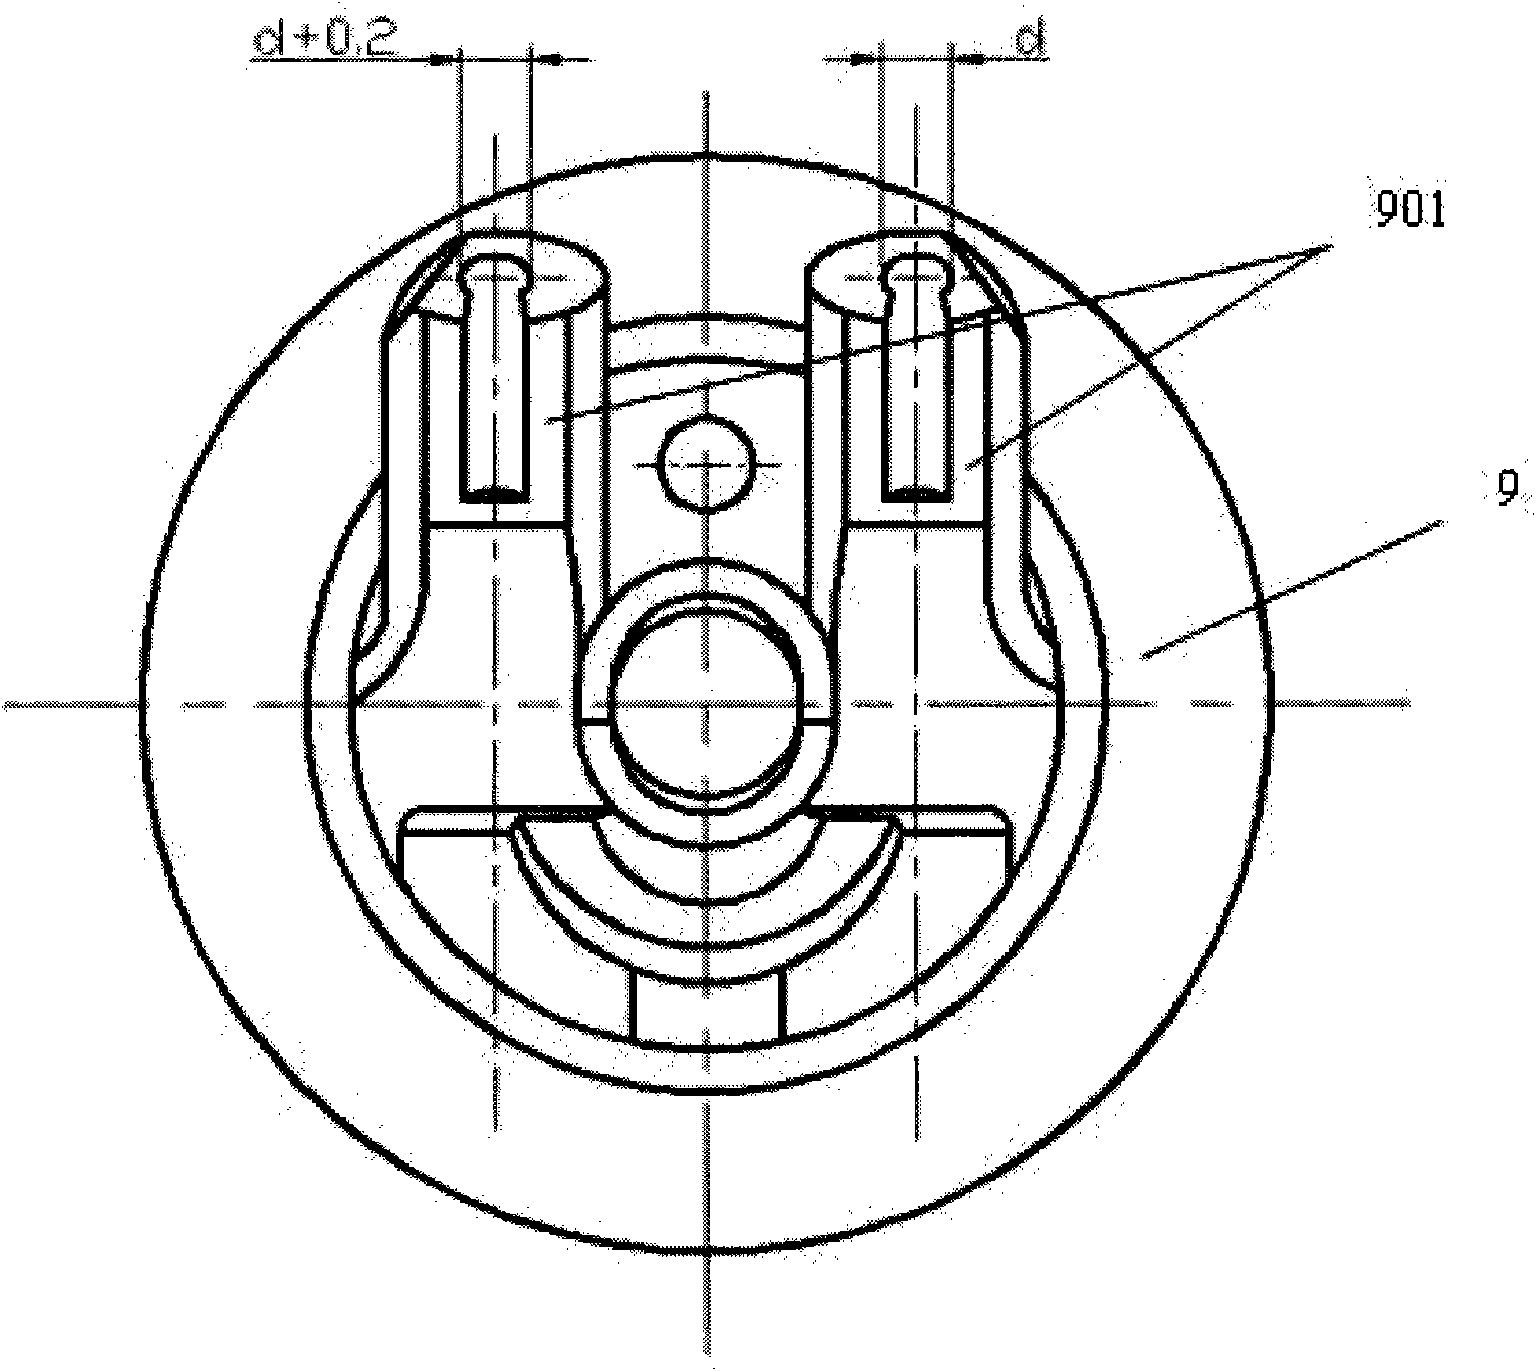 Variable displacement swash plate compressor